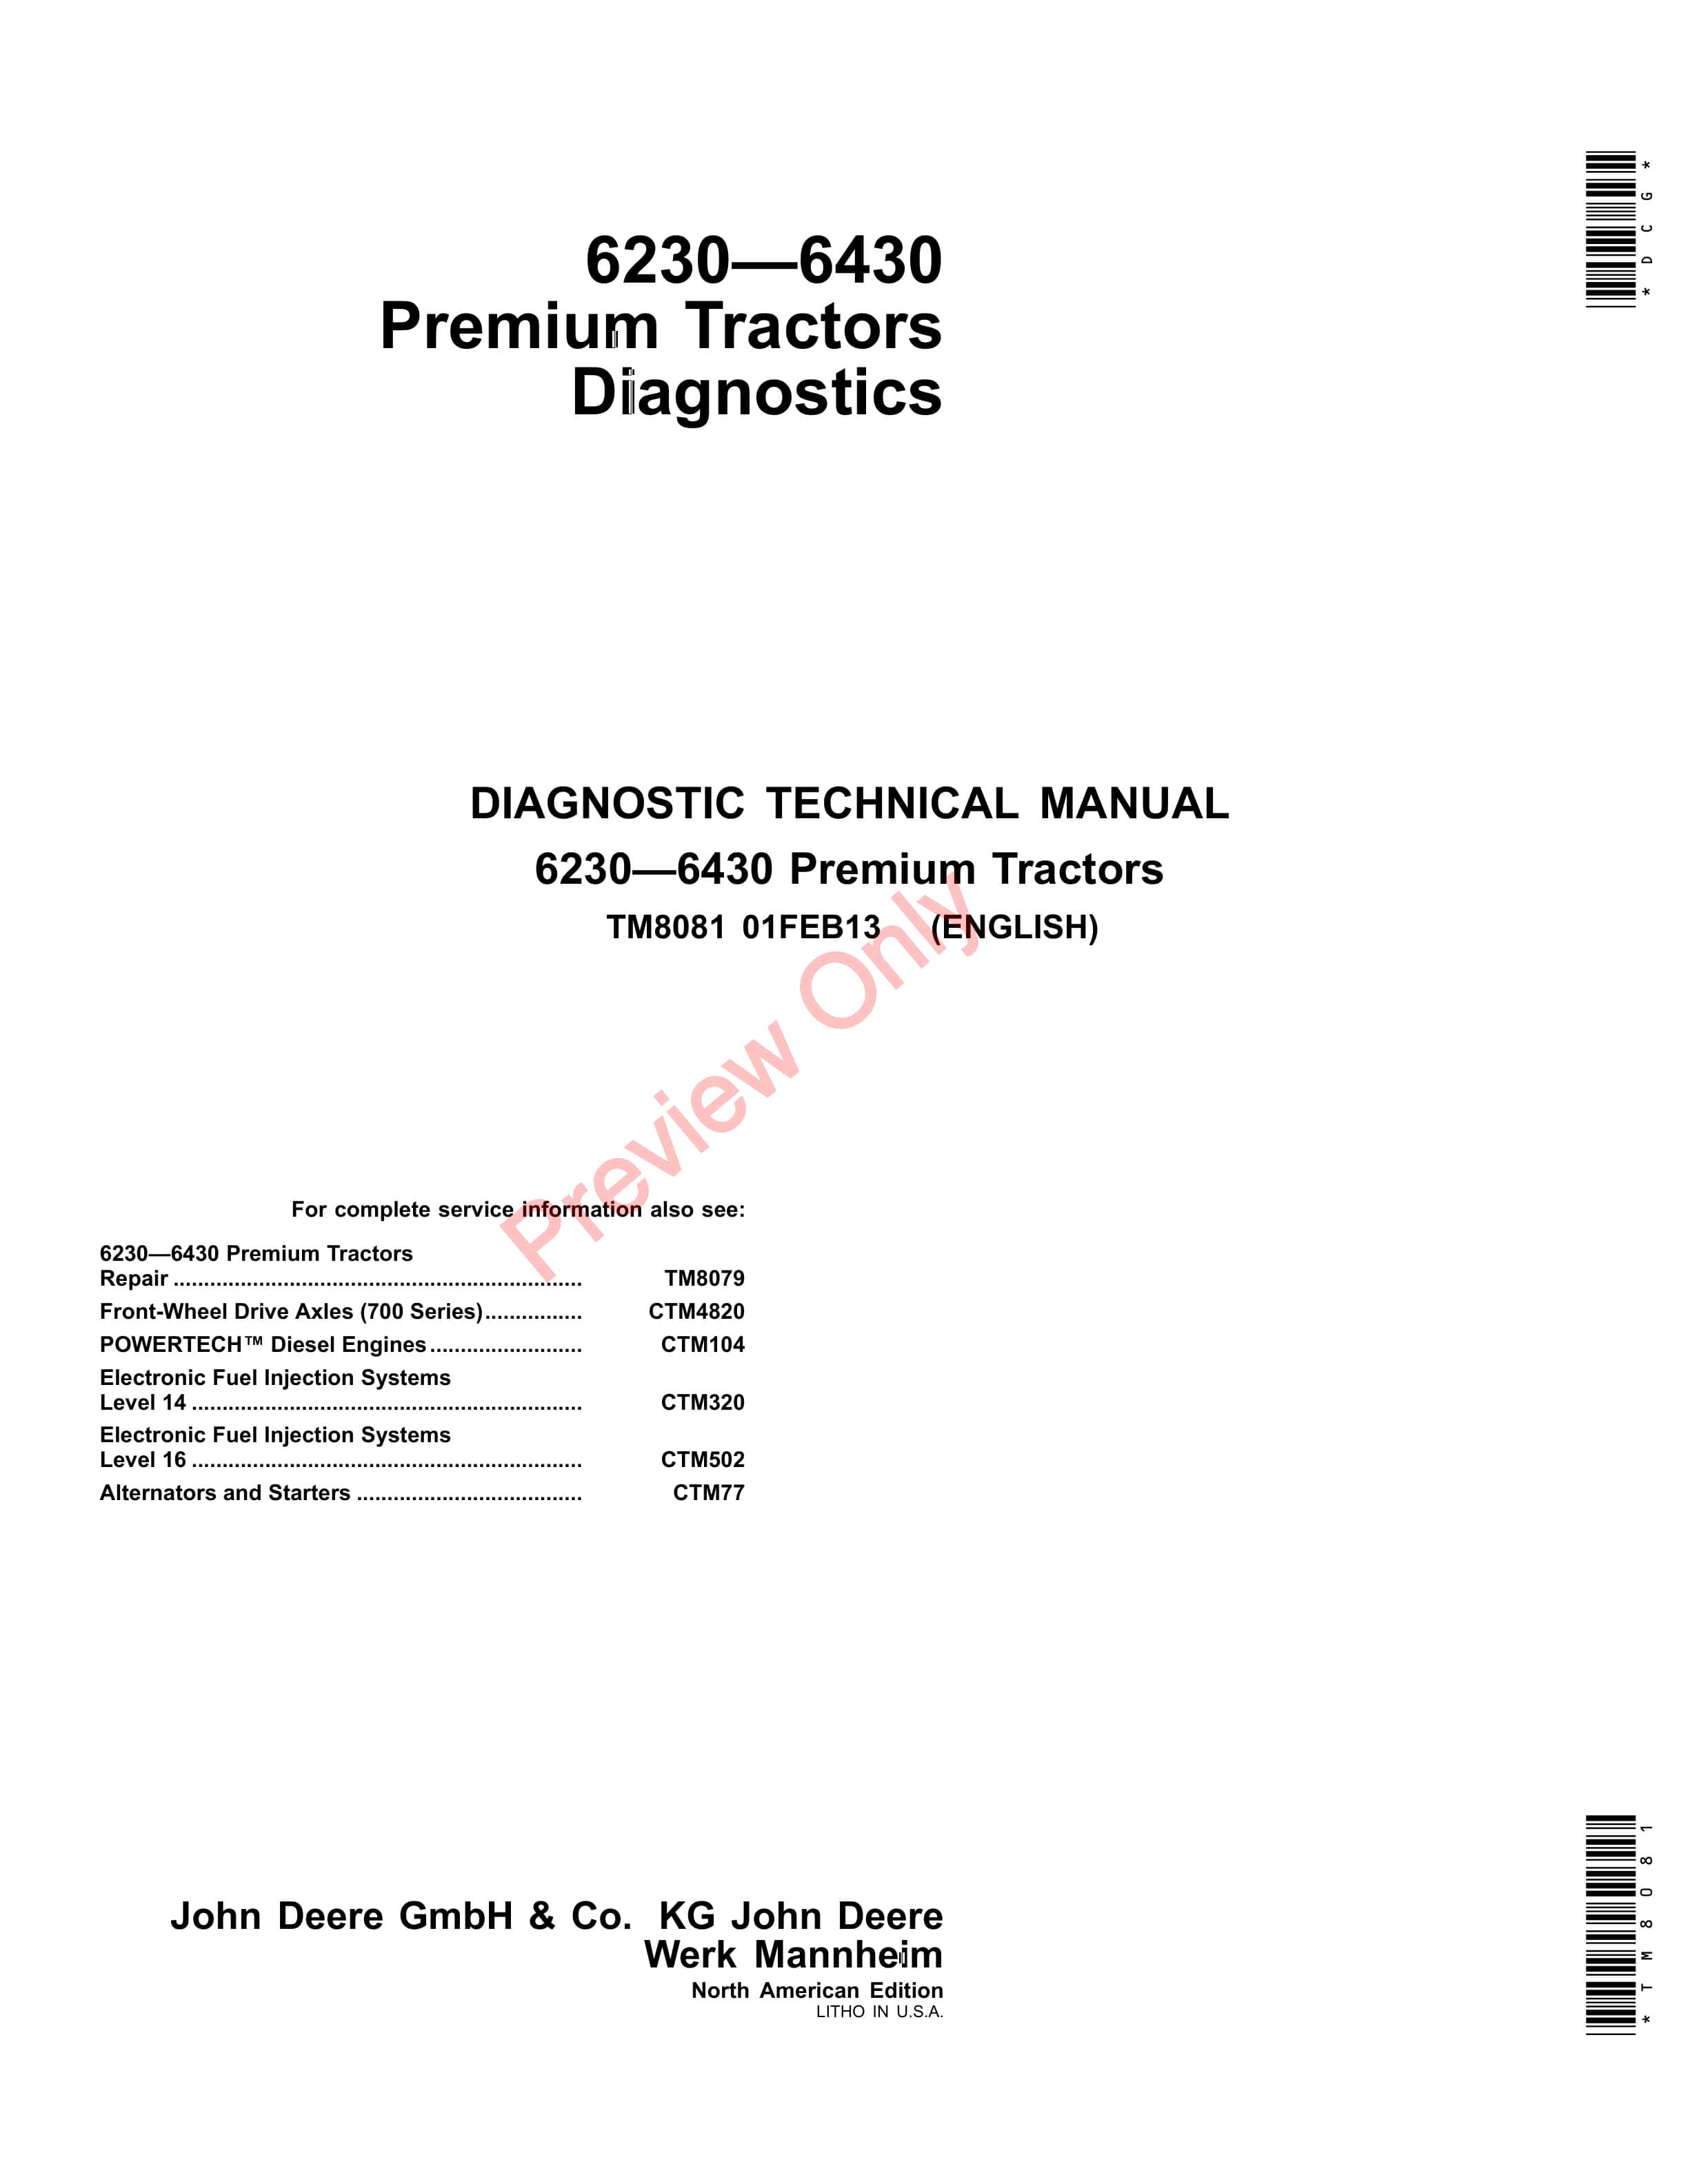 John Deere Premium Tractors 6230 6330 and 6430 Technical Manual TM8081 01FEB13 1